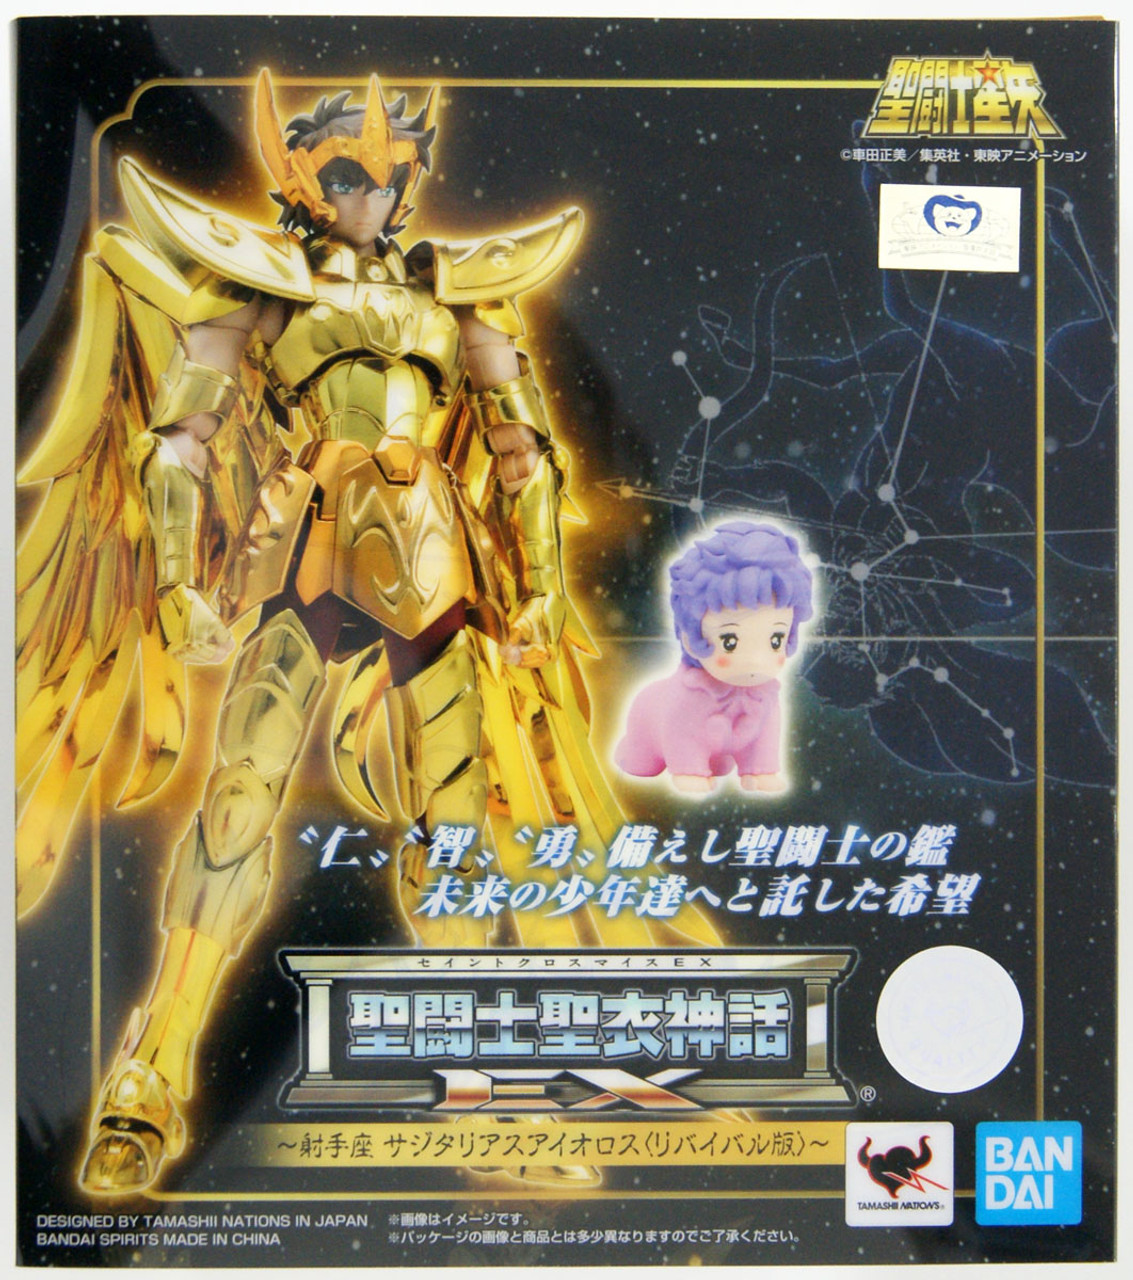 Knights of the Zodiac: Saint Seiya Anime Heroes Sagittarius Aiolos (Reissue)